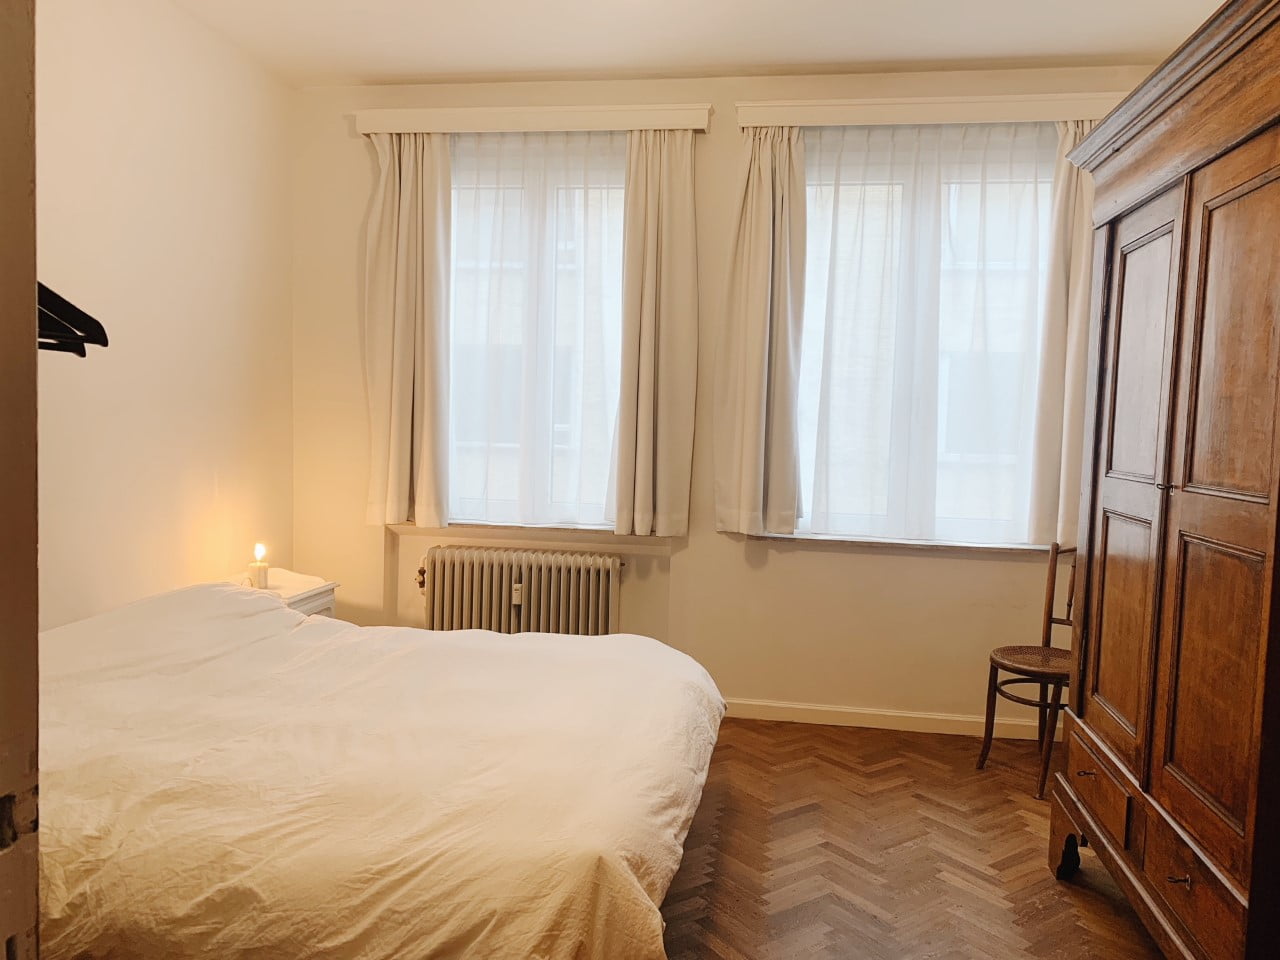 Benoit - Furnished temporary rental in Antwerp